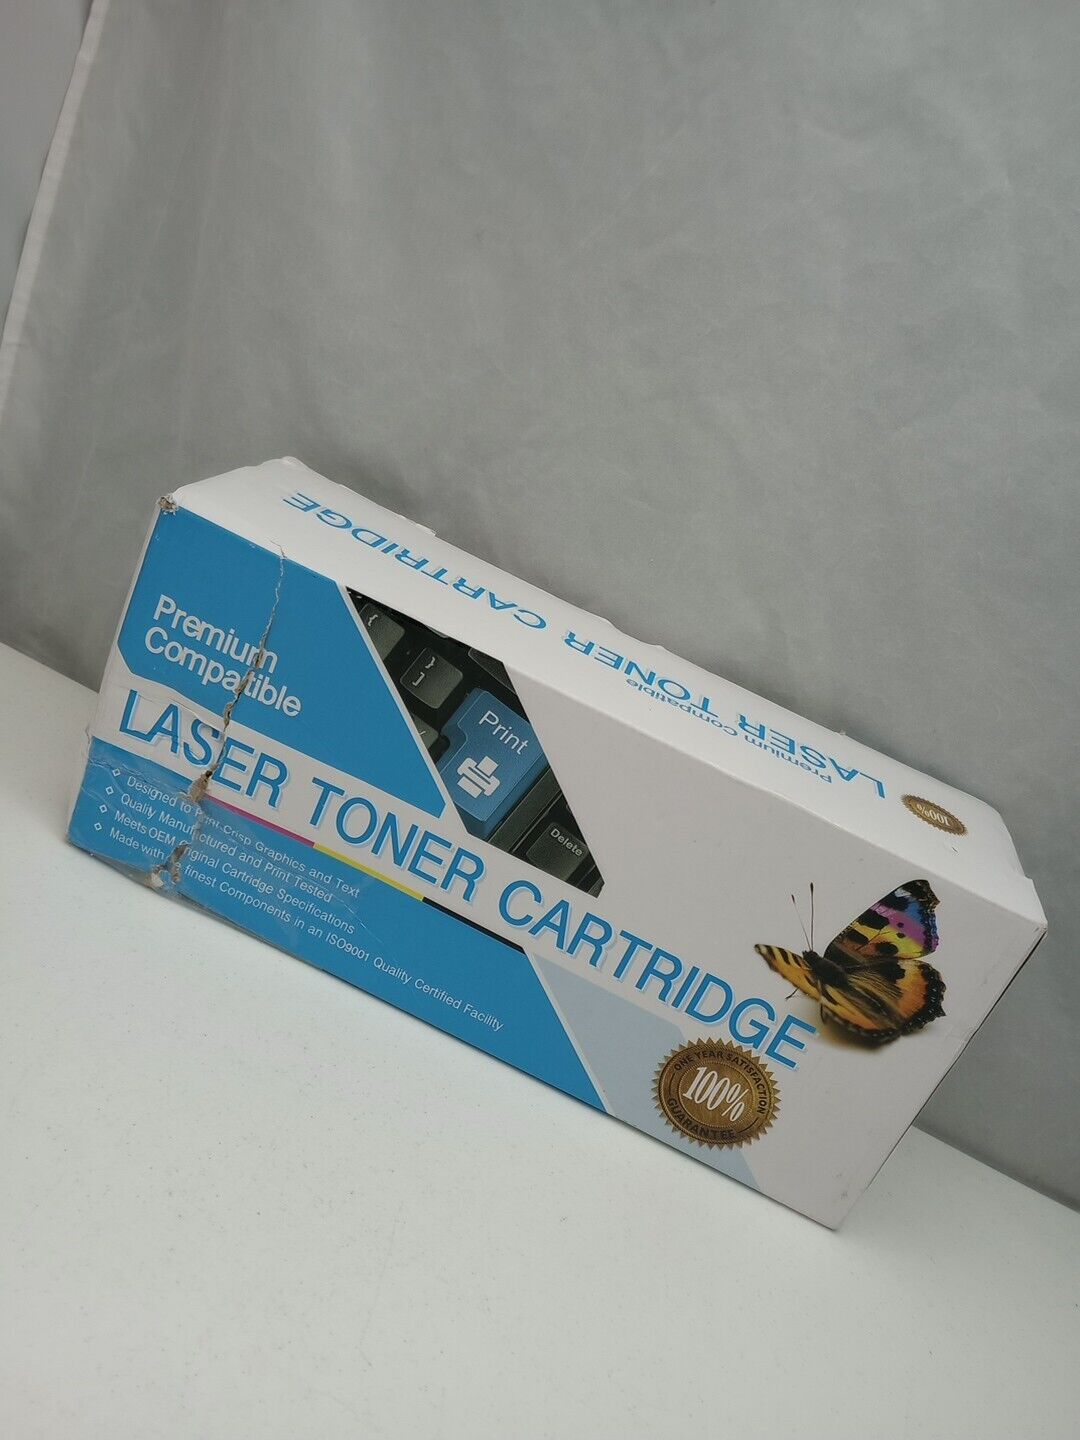 Premium Compatible Laser Toner Cartridge - CSMLTD111S.  75